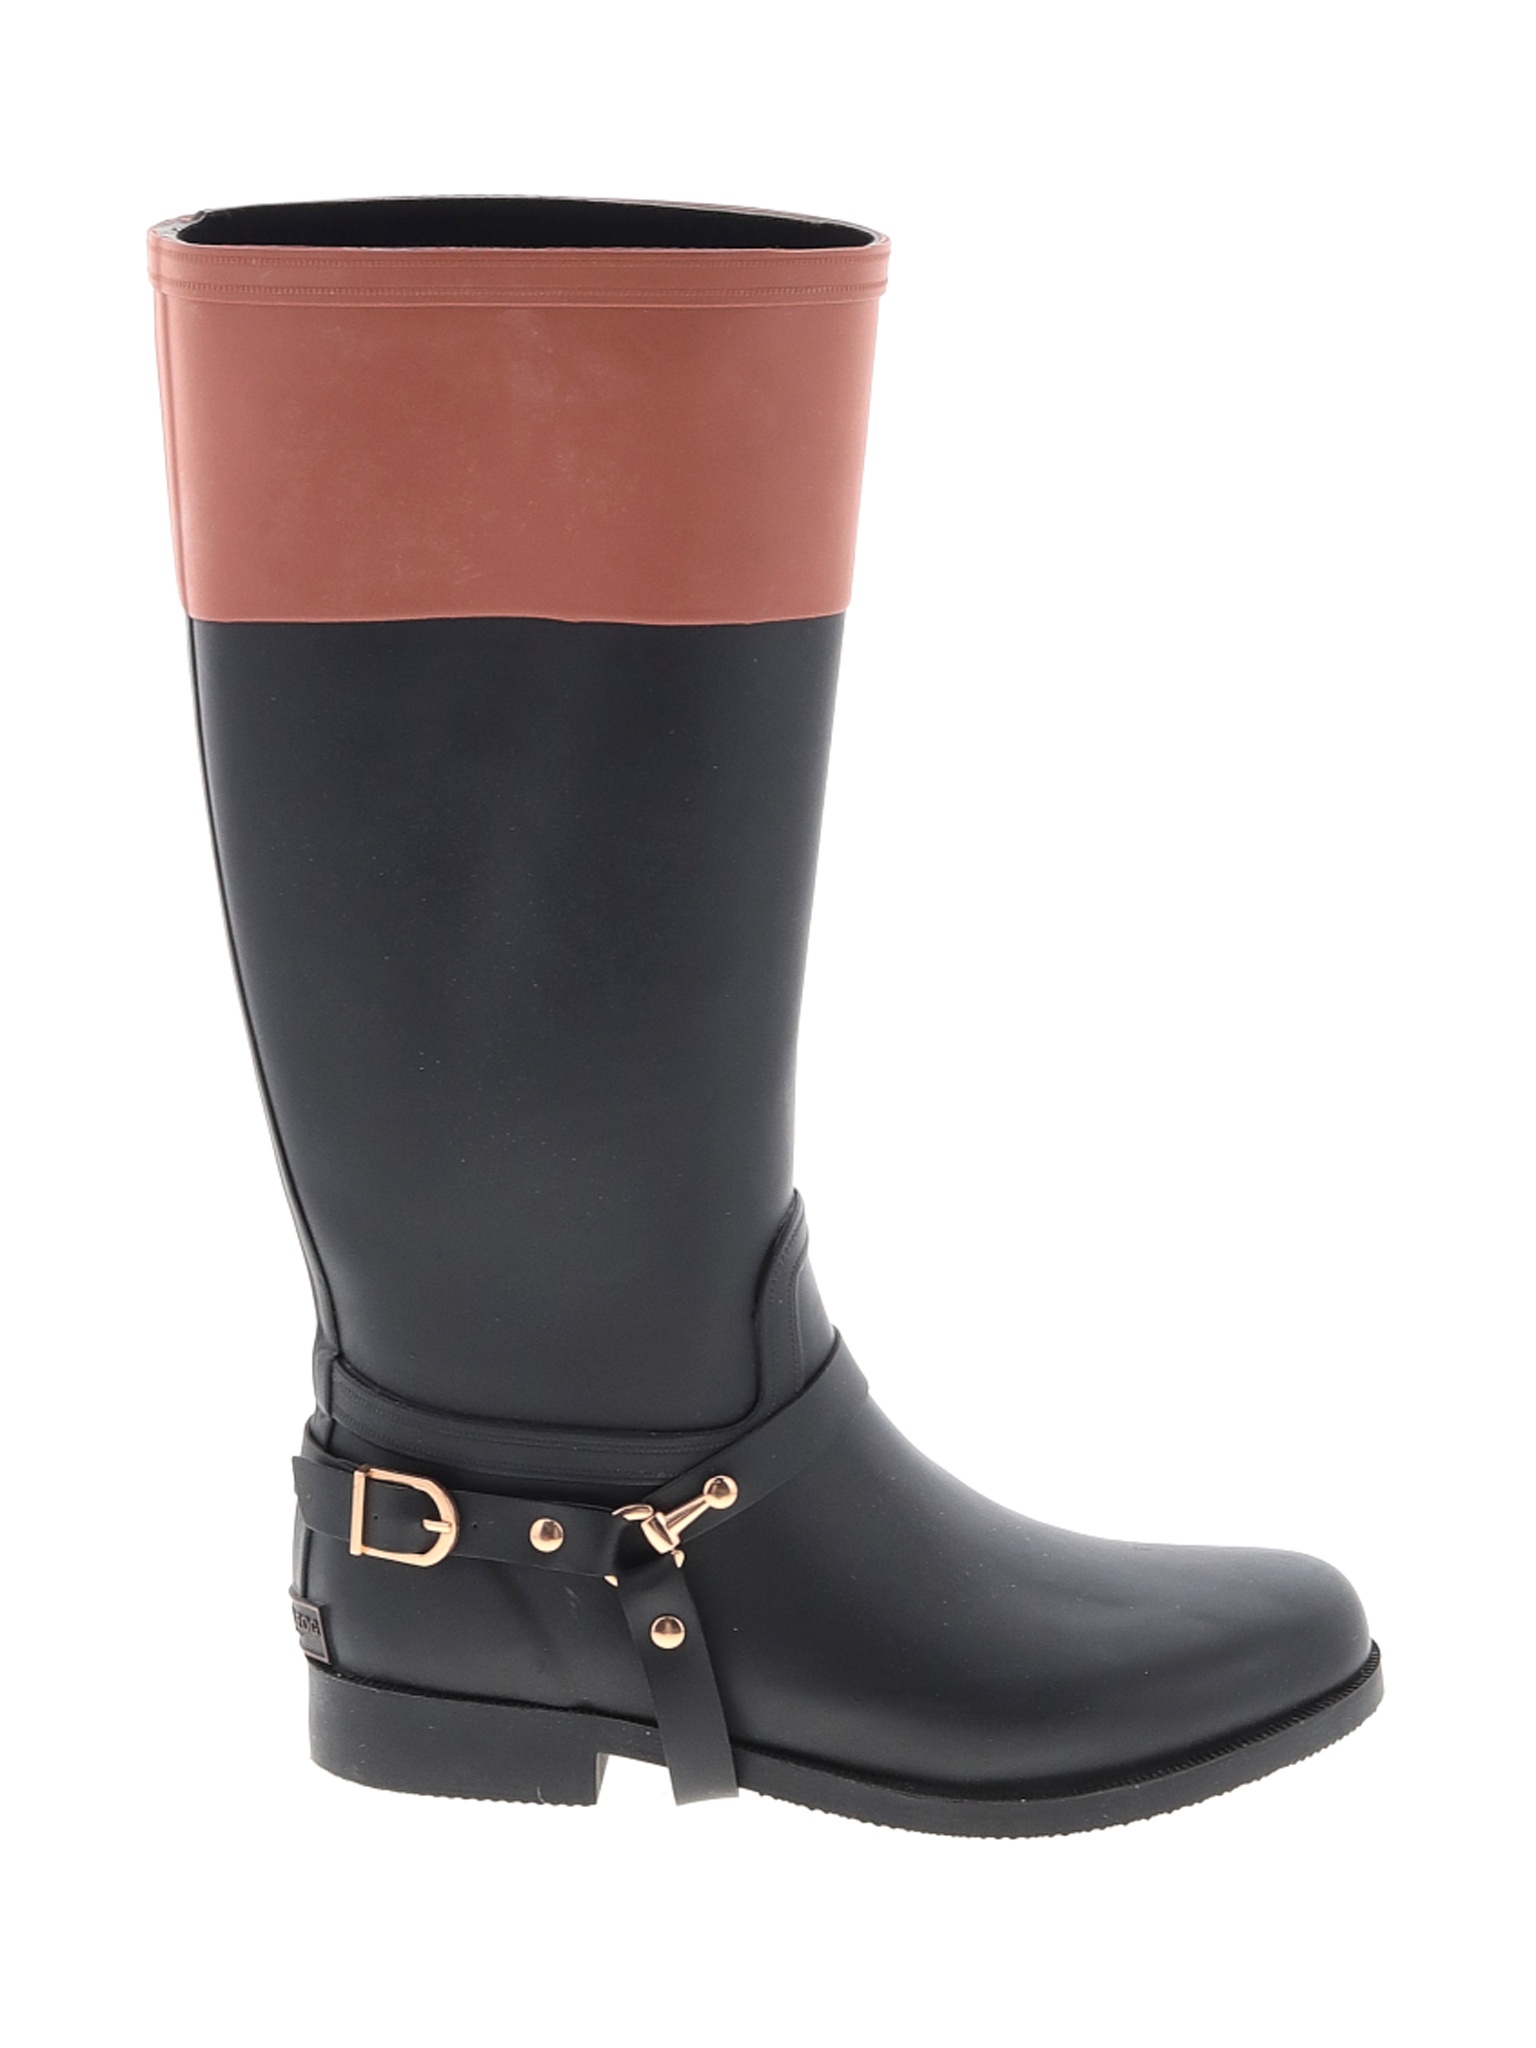 London Fog Women Black Boots US 8 | eBay